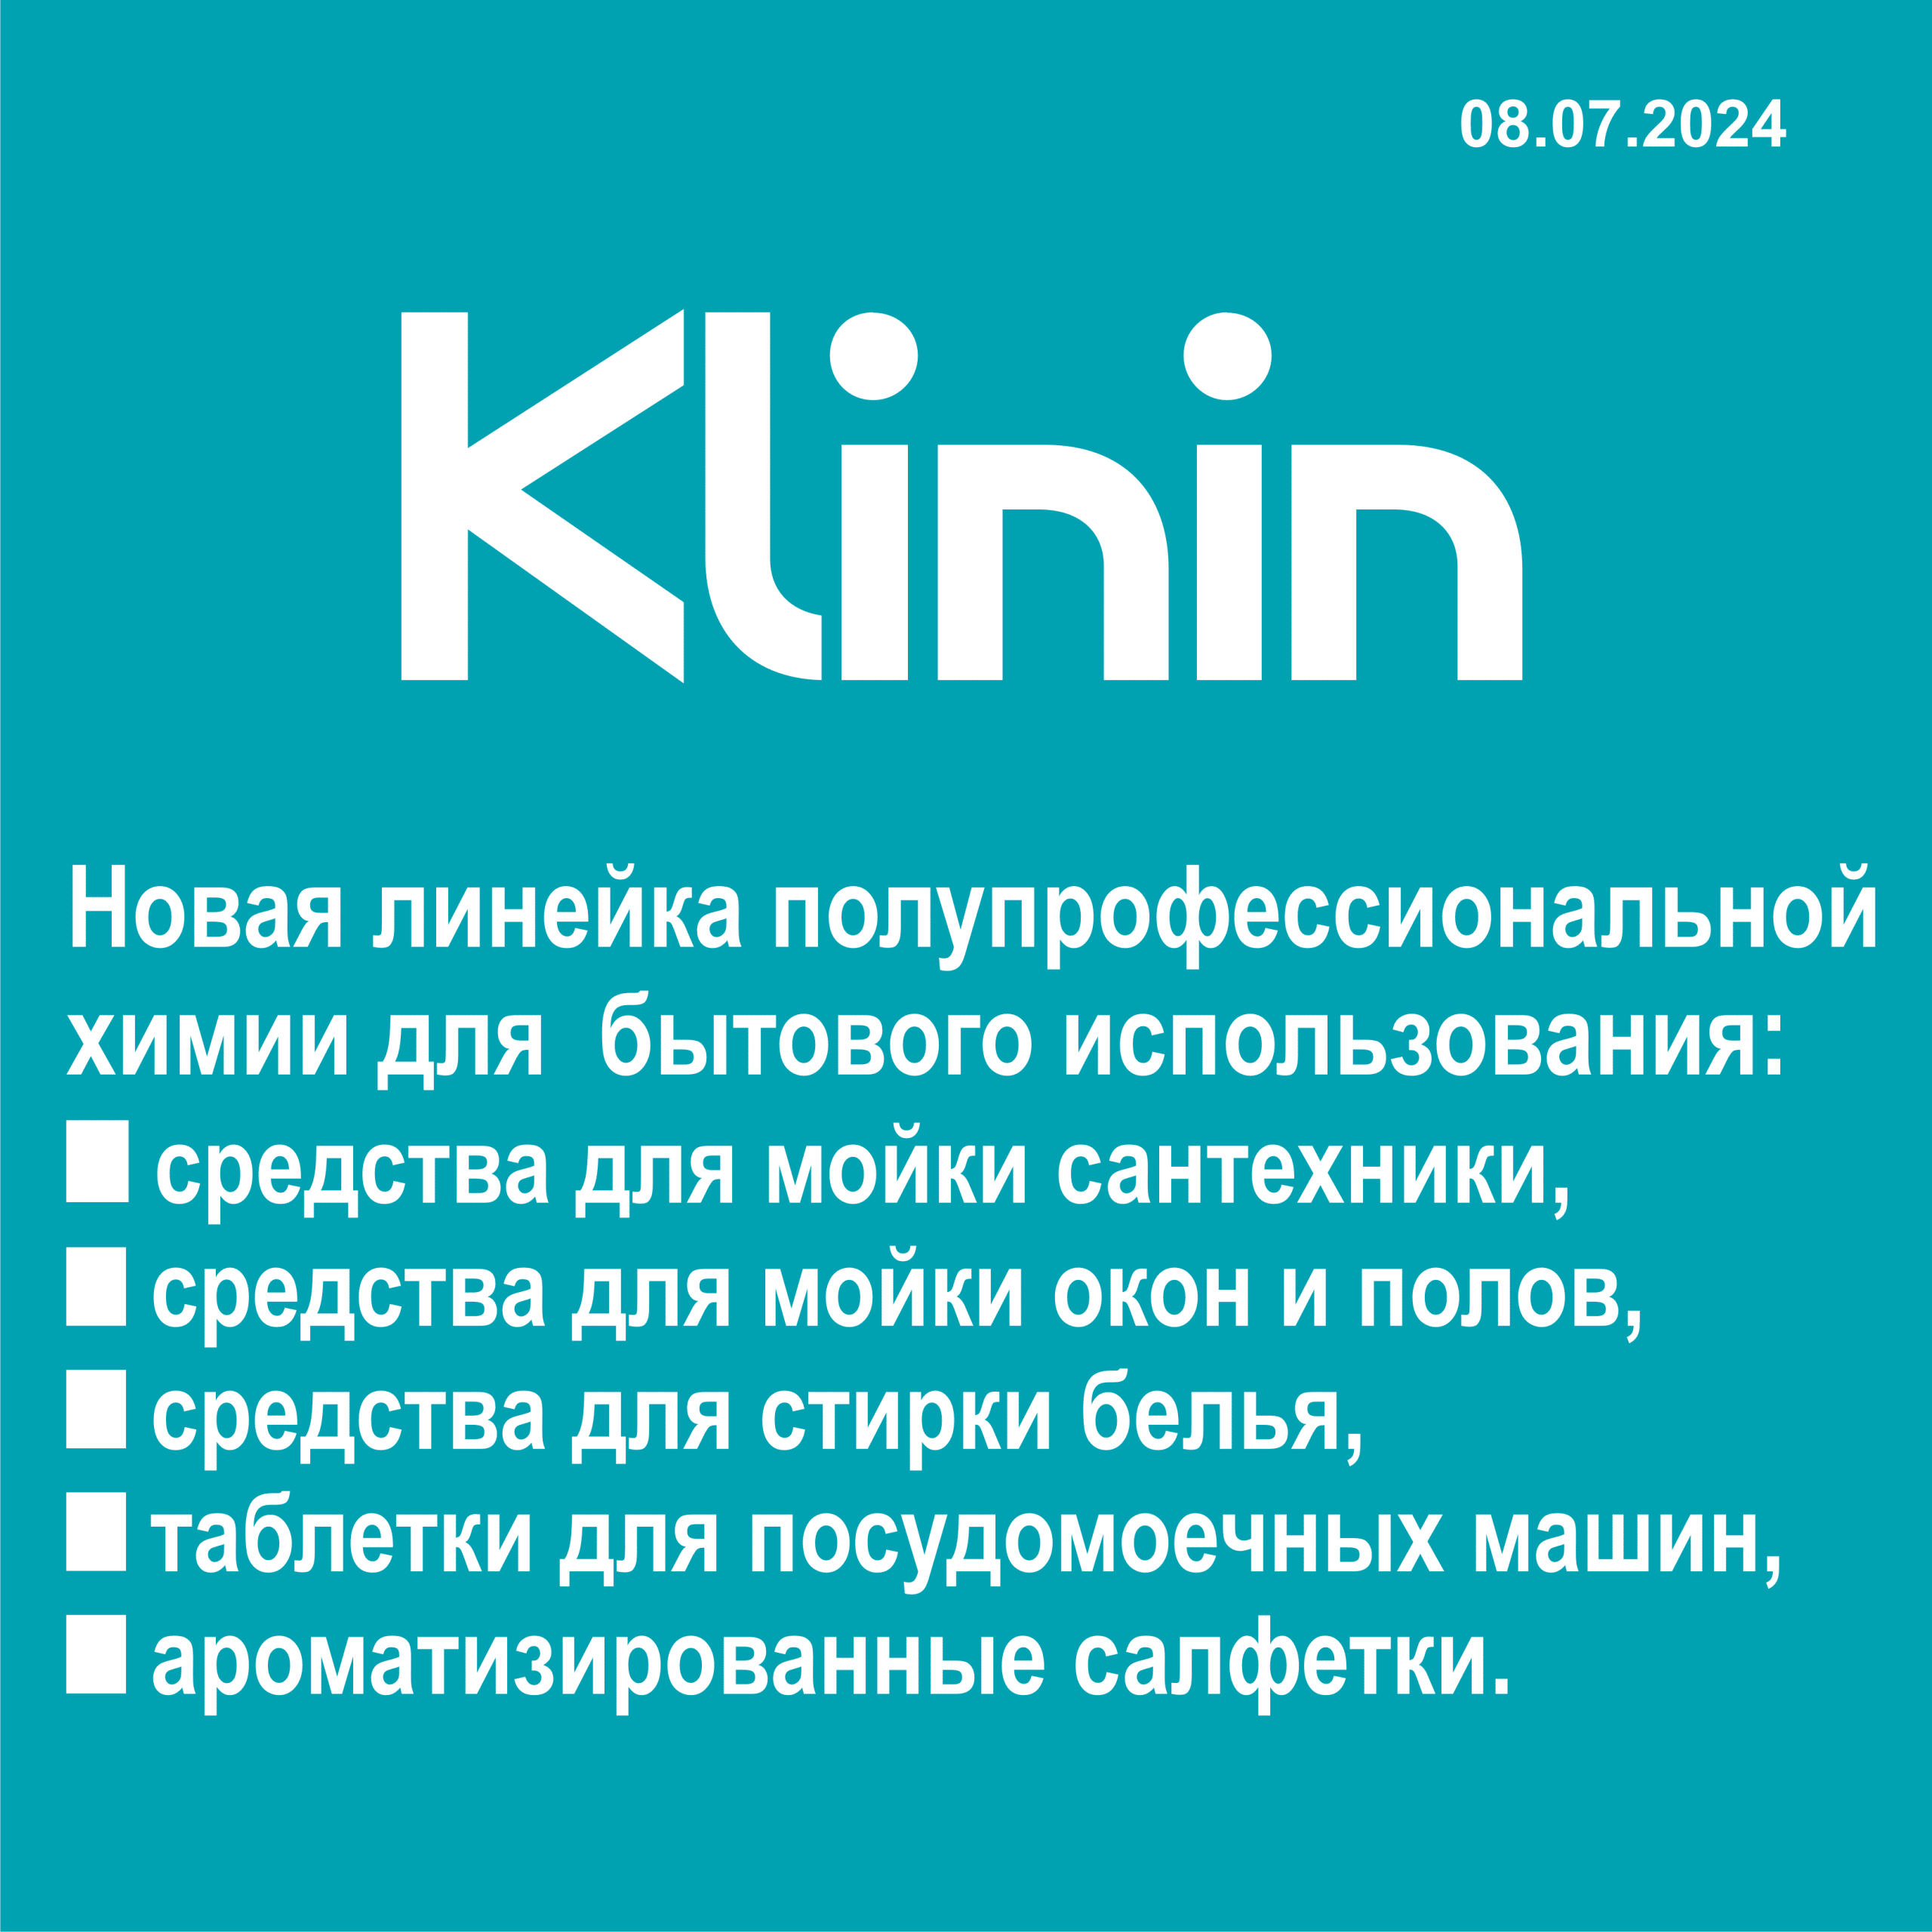 Klinin_new.